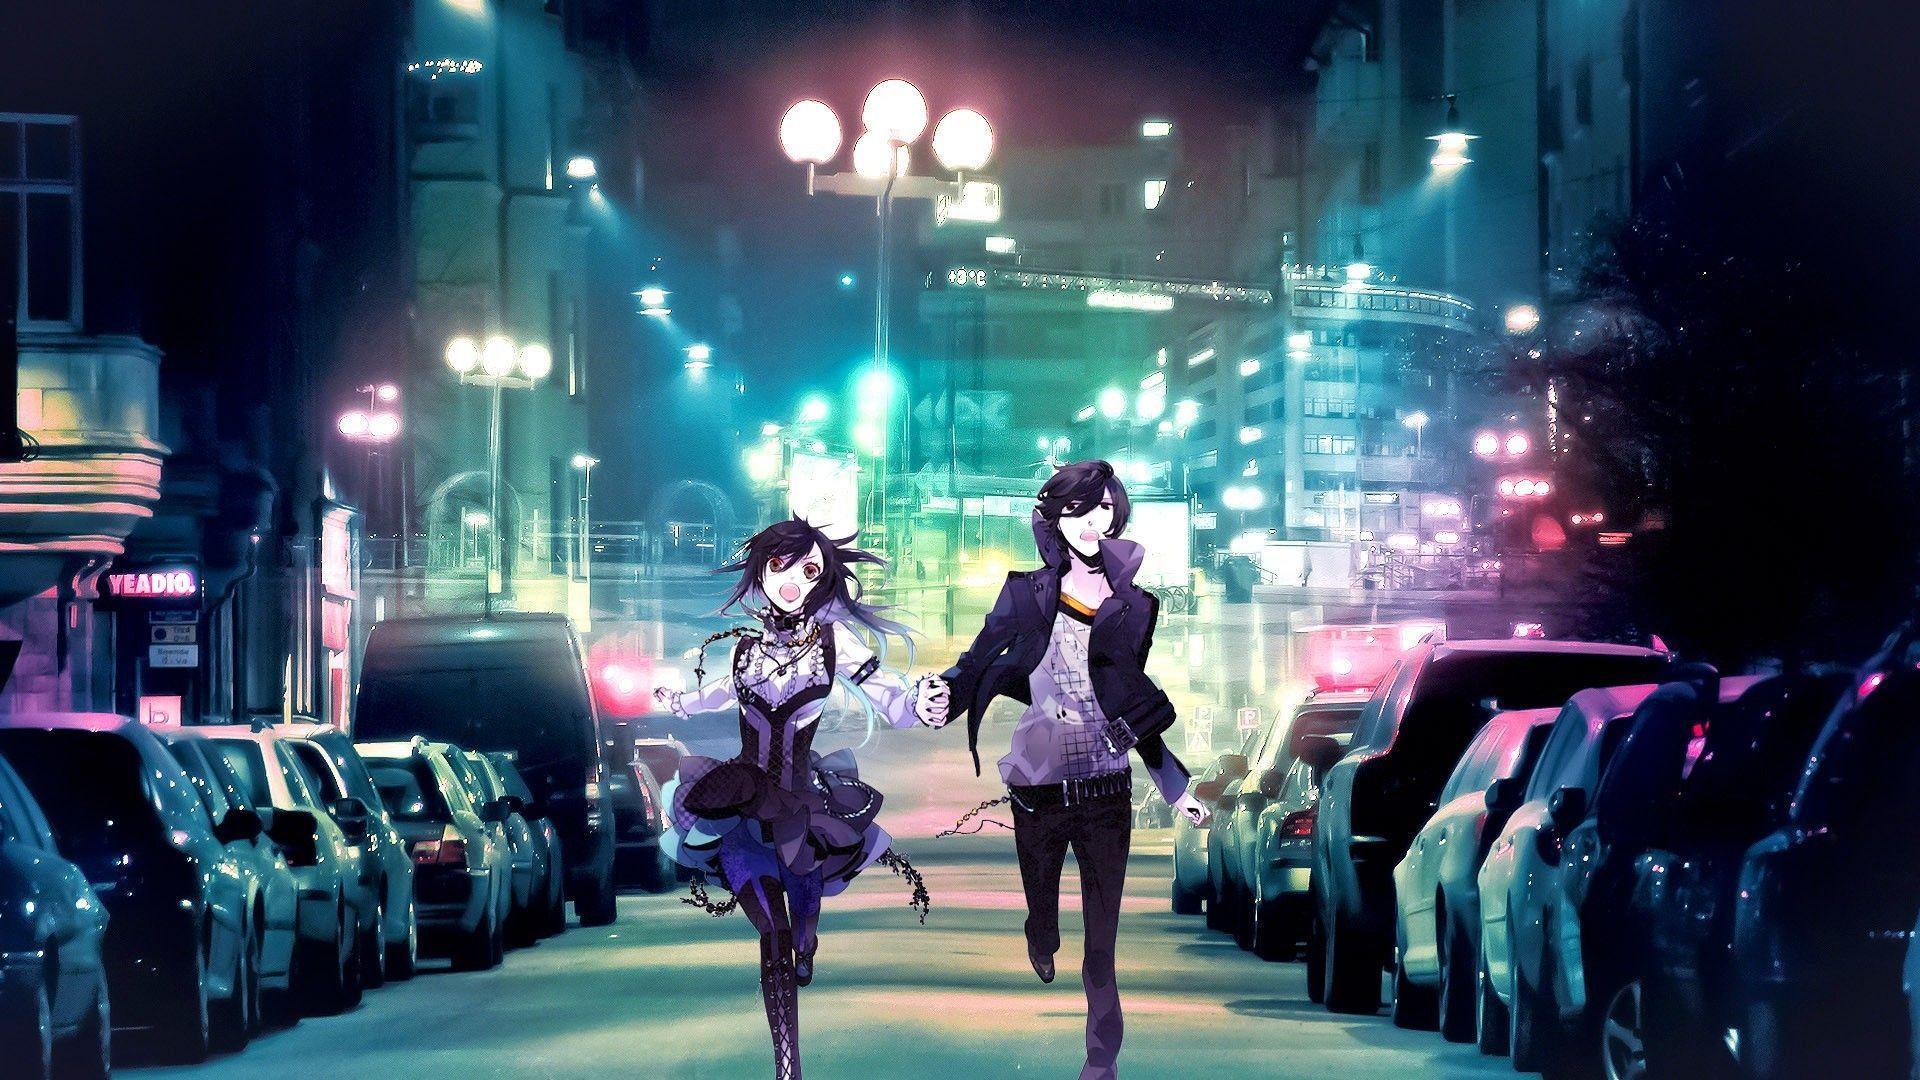 Romantic Anime Wallpaper Free Romantic Anime Background